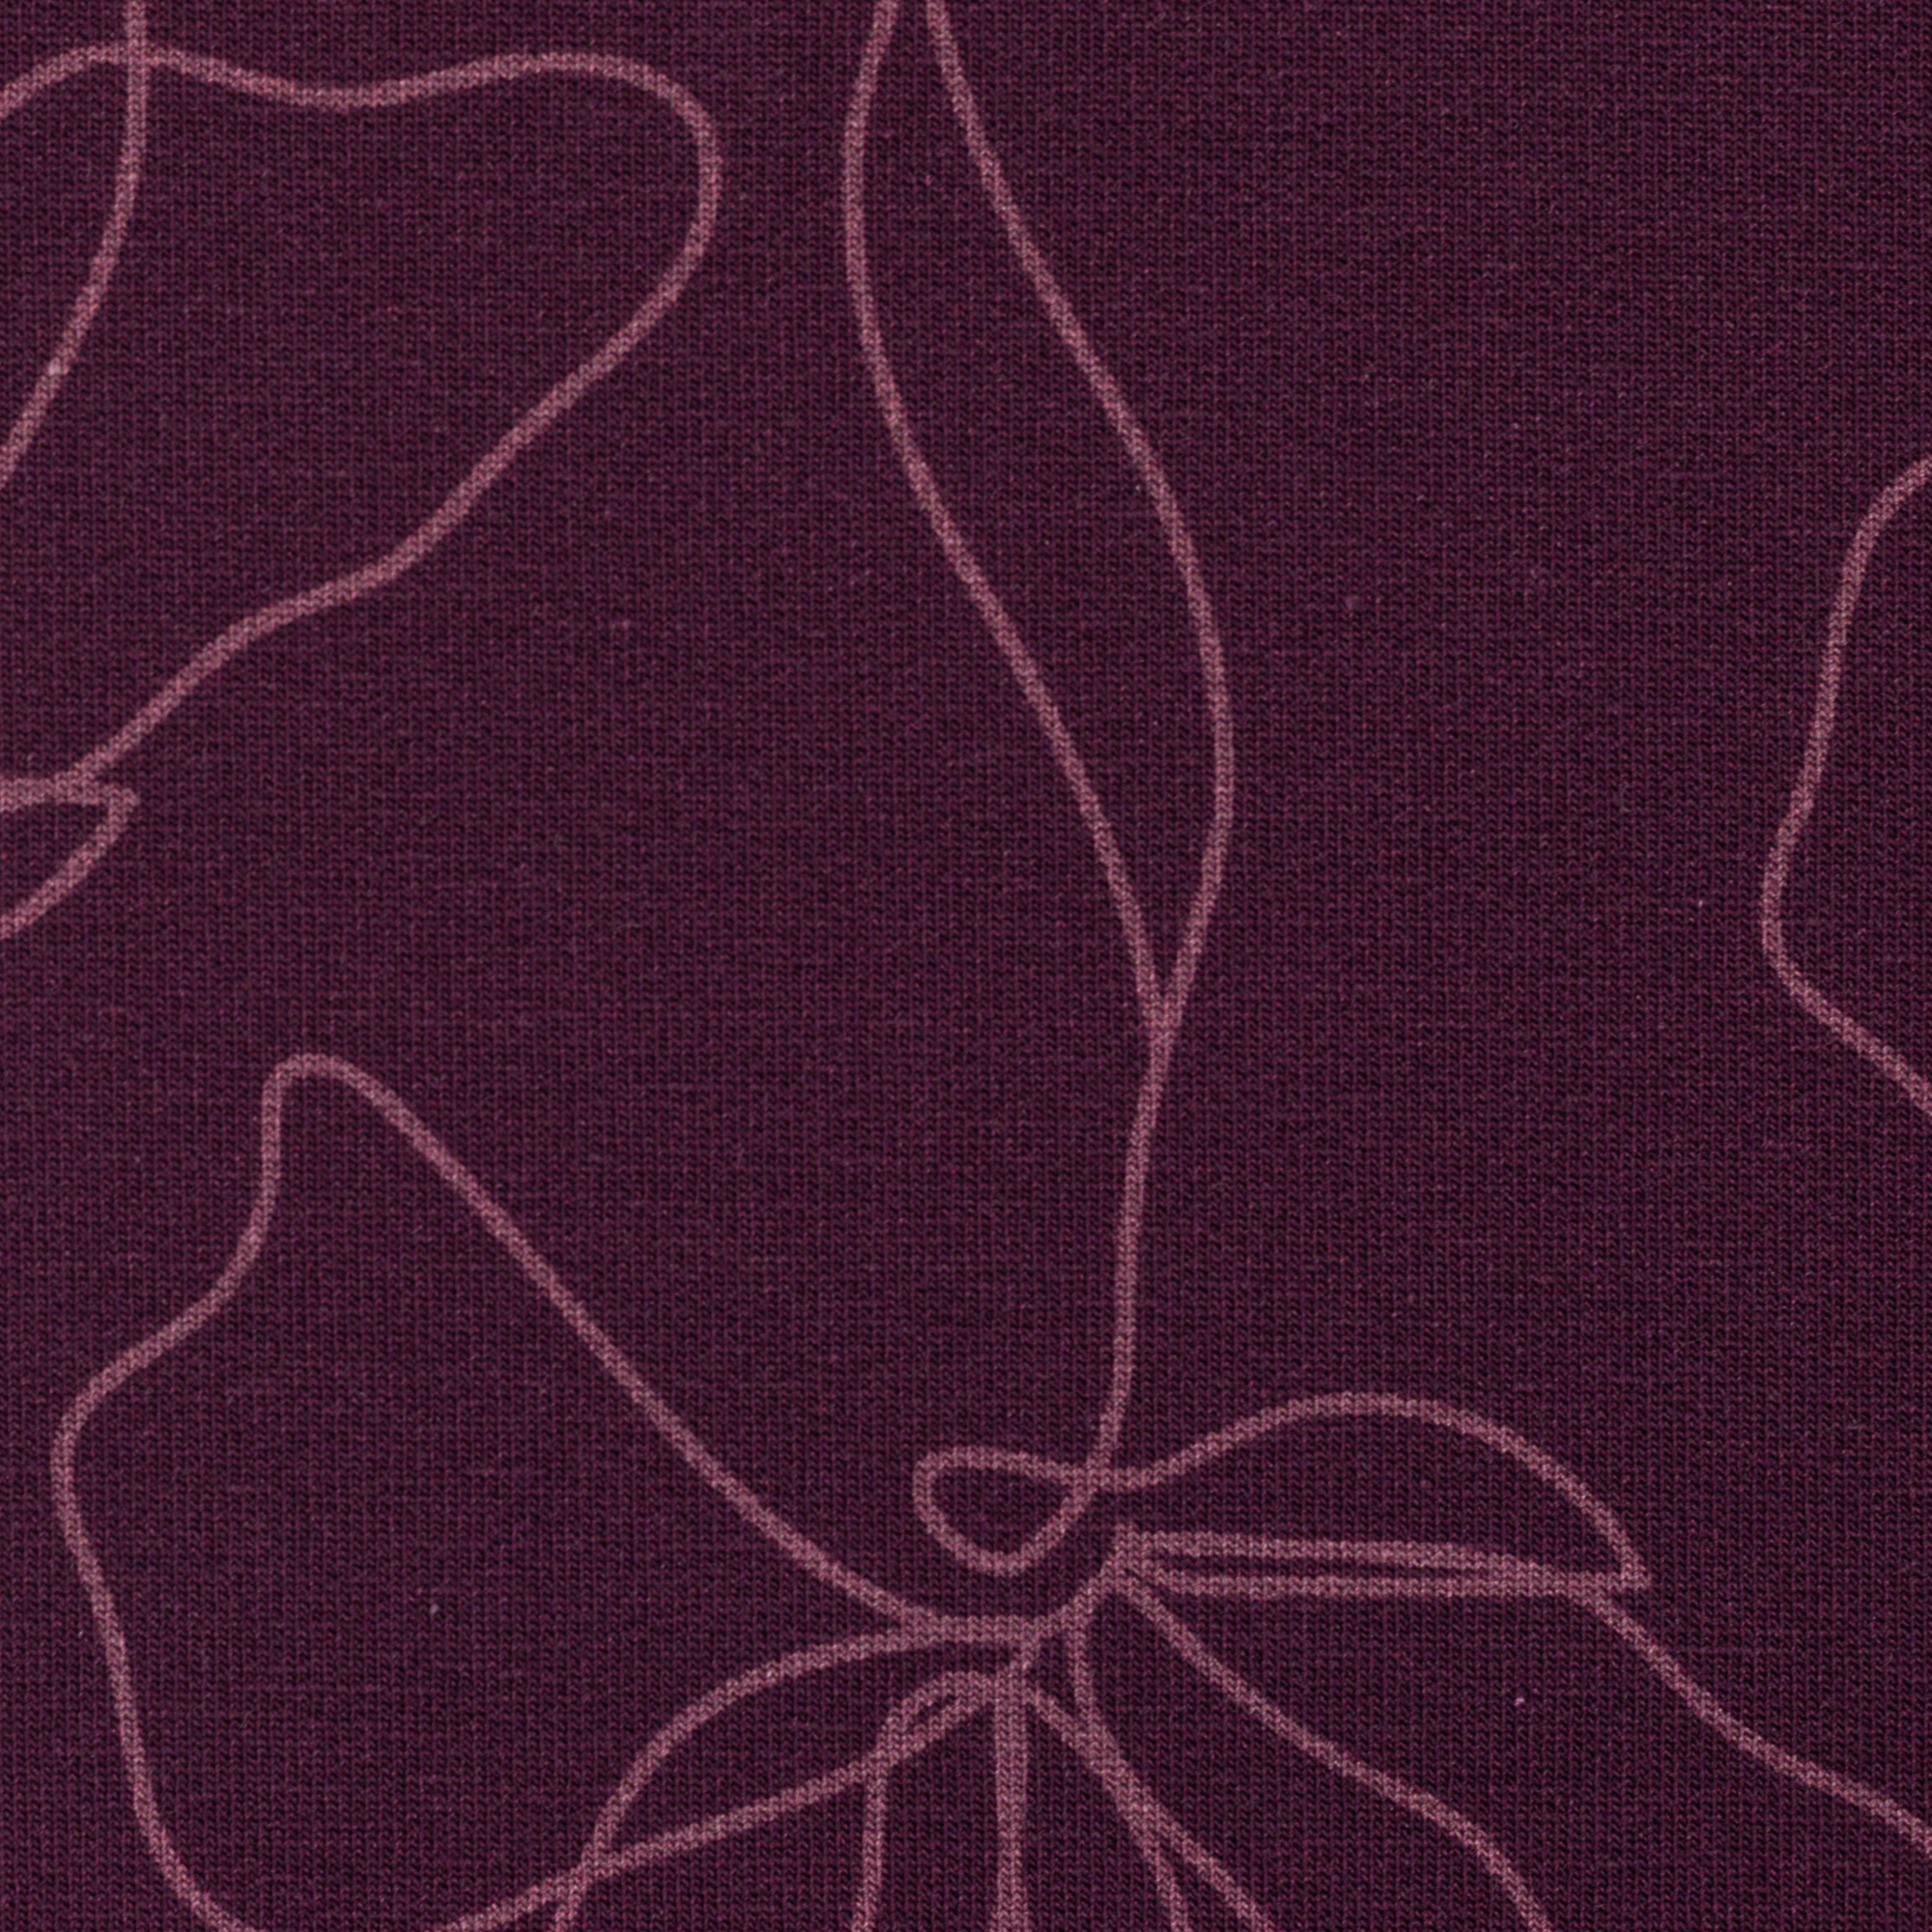 Modaal dressiriie - Marvelous Flowers by Lycklig design, lilla